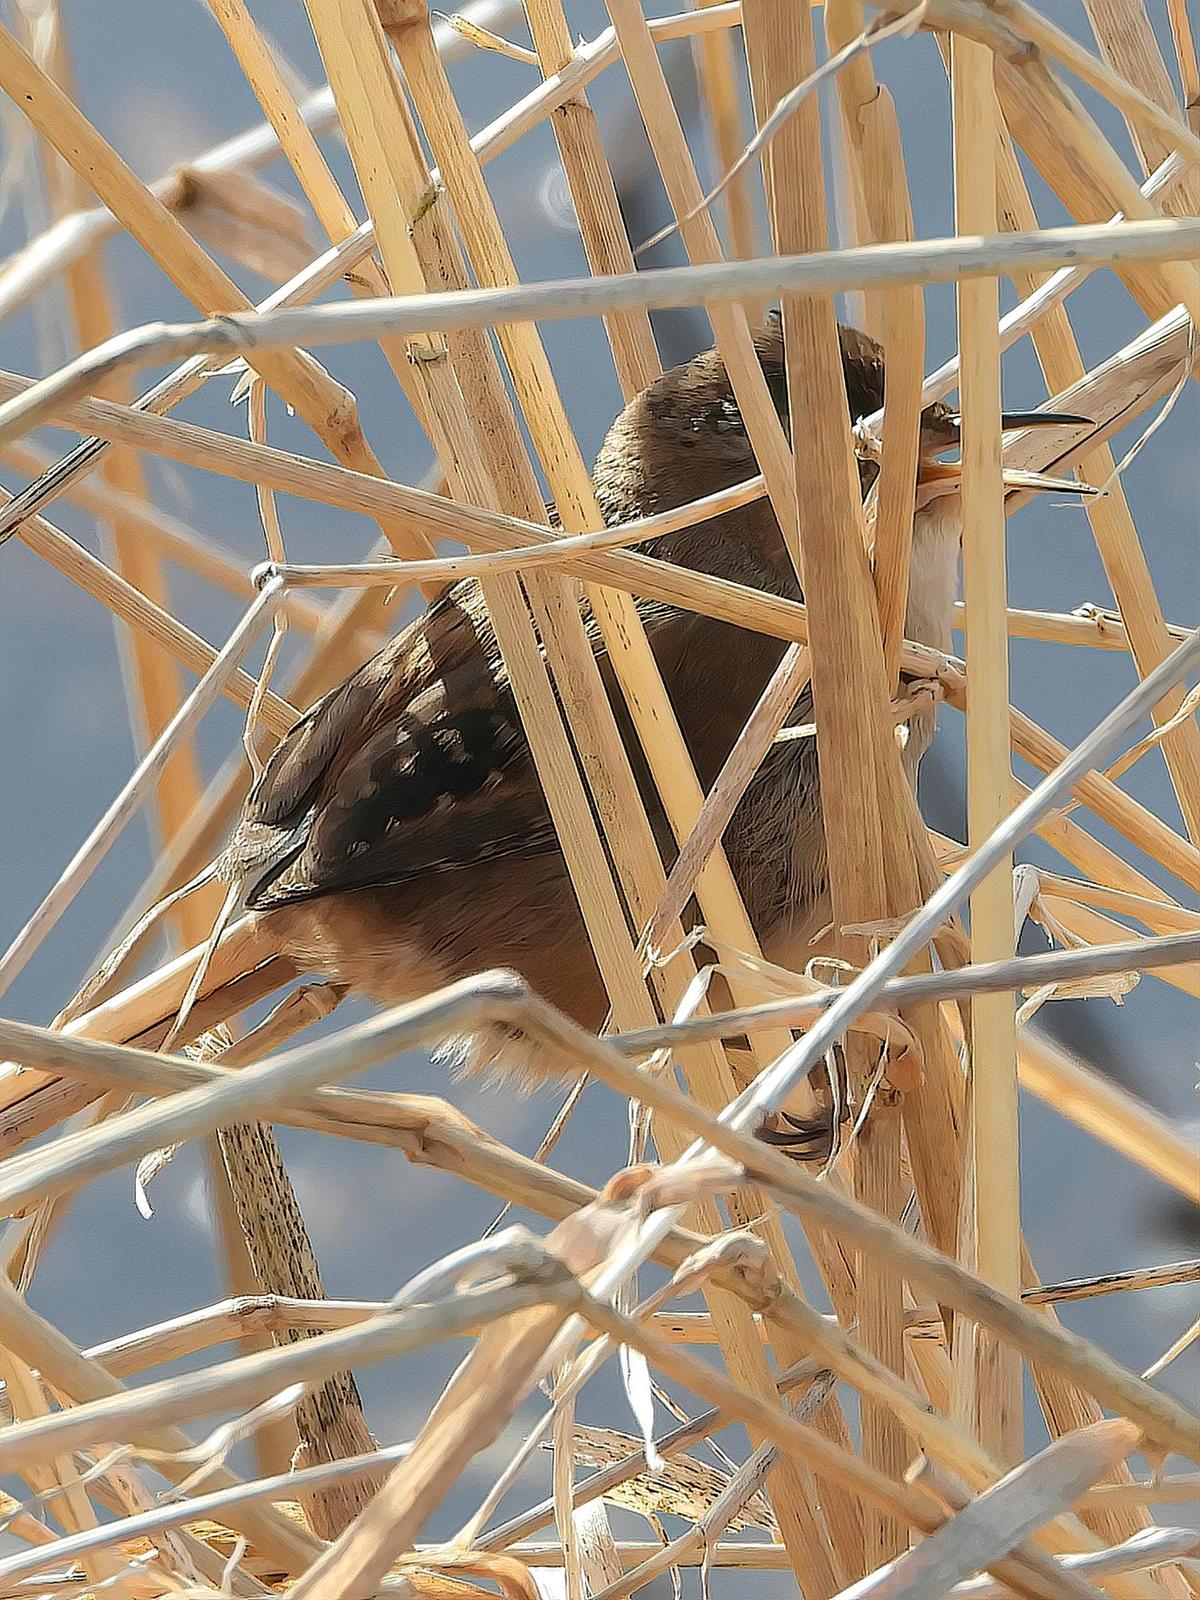 Marsh Wren Photo by Dan Tallman